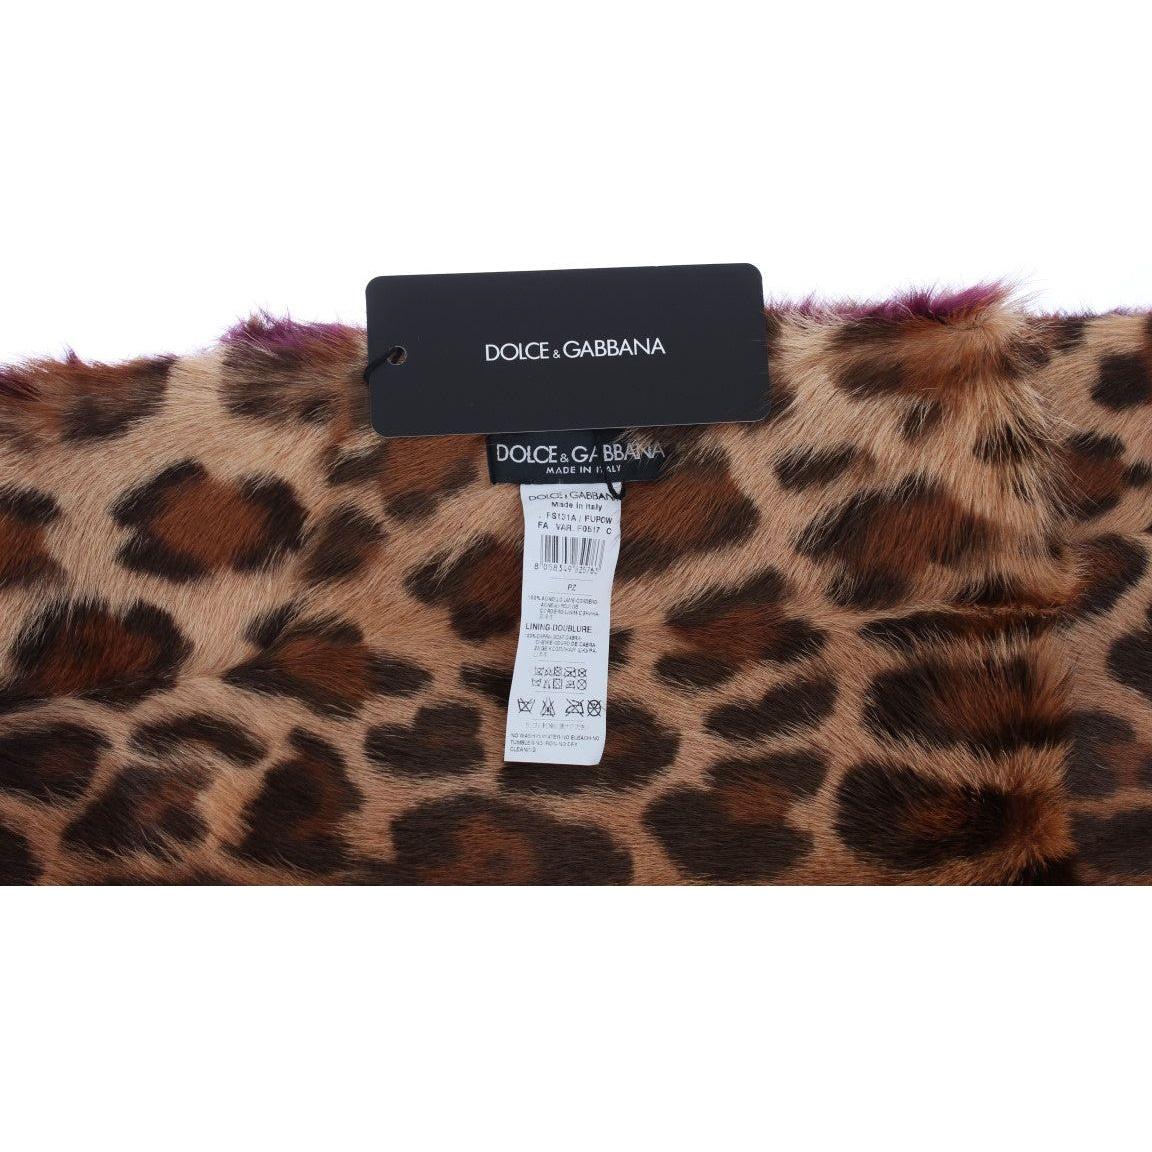 Dolce & Gabbana Exquisite Leopard Print Lambskin Fur Scarf purple-lamb-fur-leopard-print-scarf 303484-purple-lamb-fur-leopard-print-scarf-6.jpg